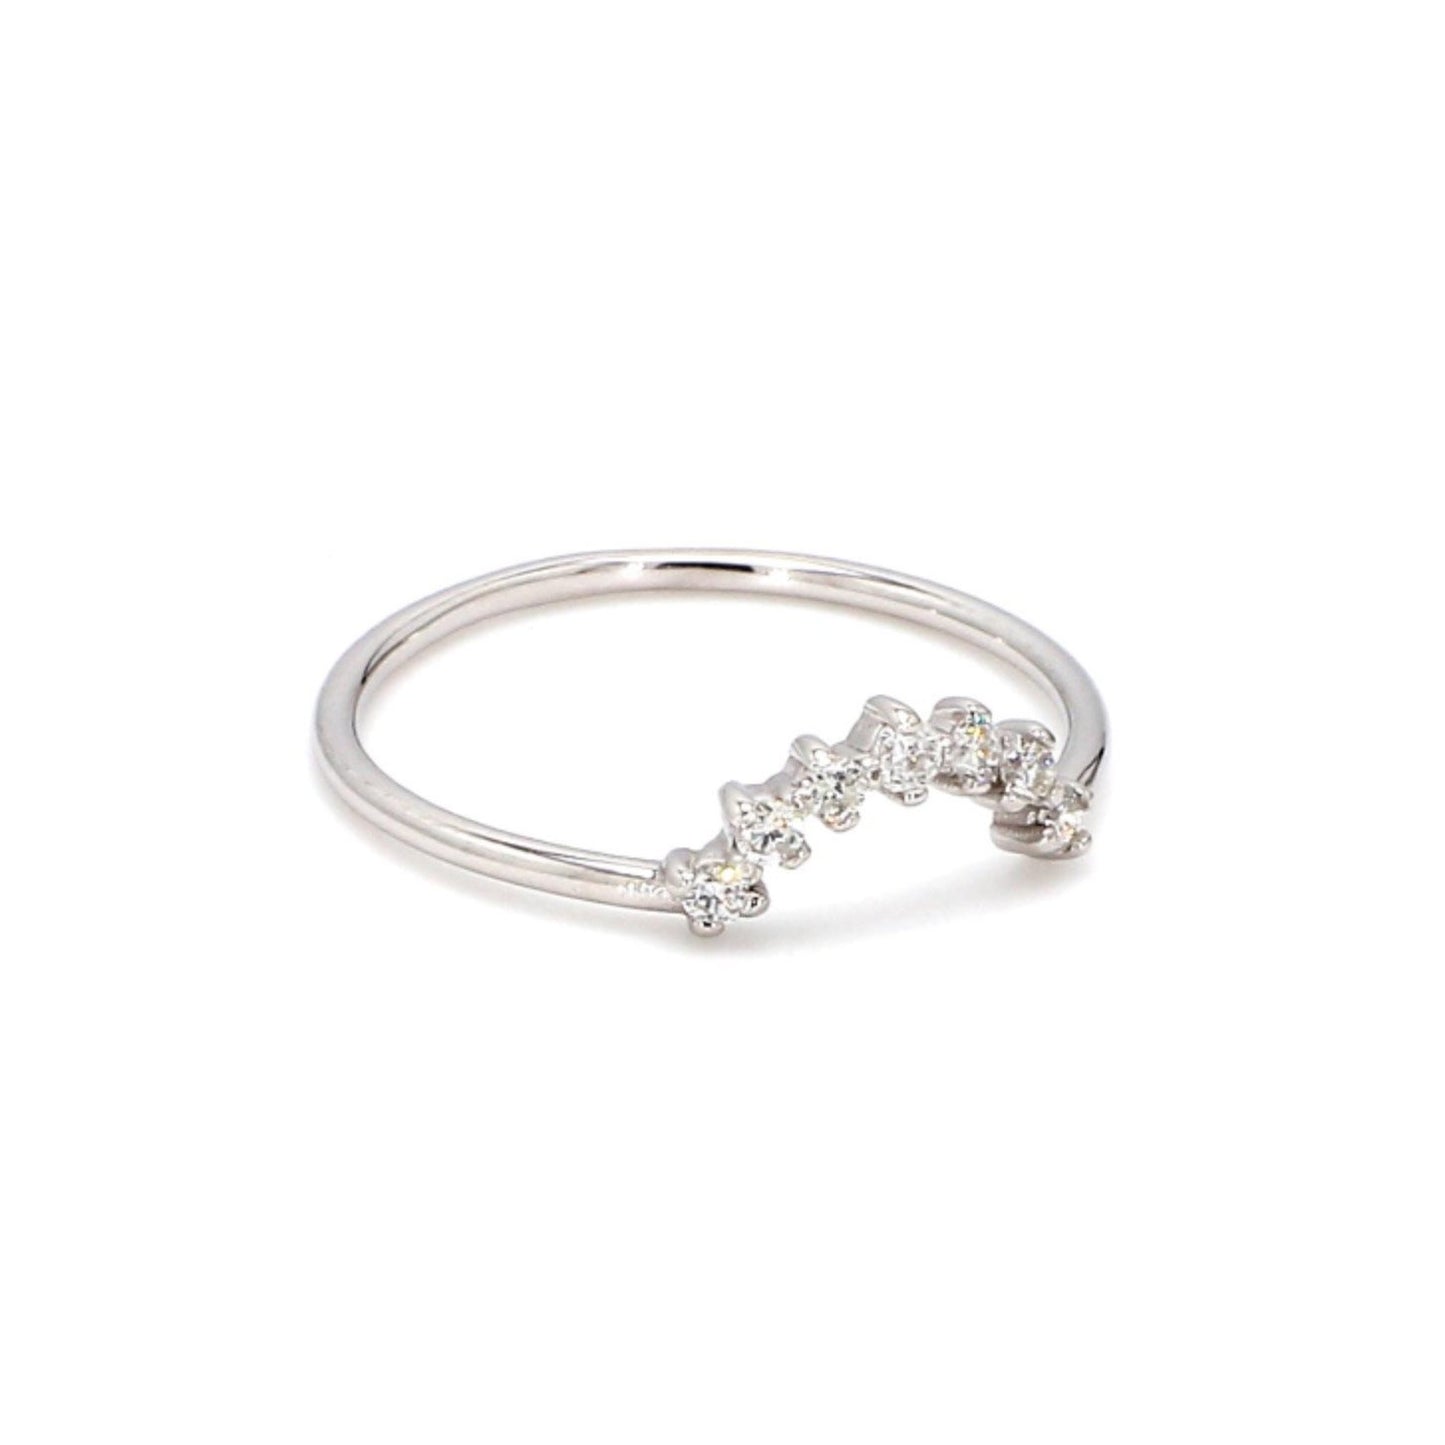 IMMEDIATE DELIVERY / Corona Mila Ring with white Diamonds / 14k white gold / Size 6.5